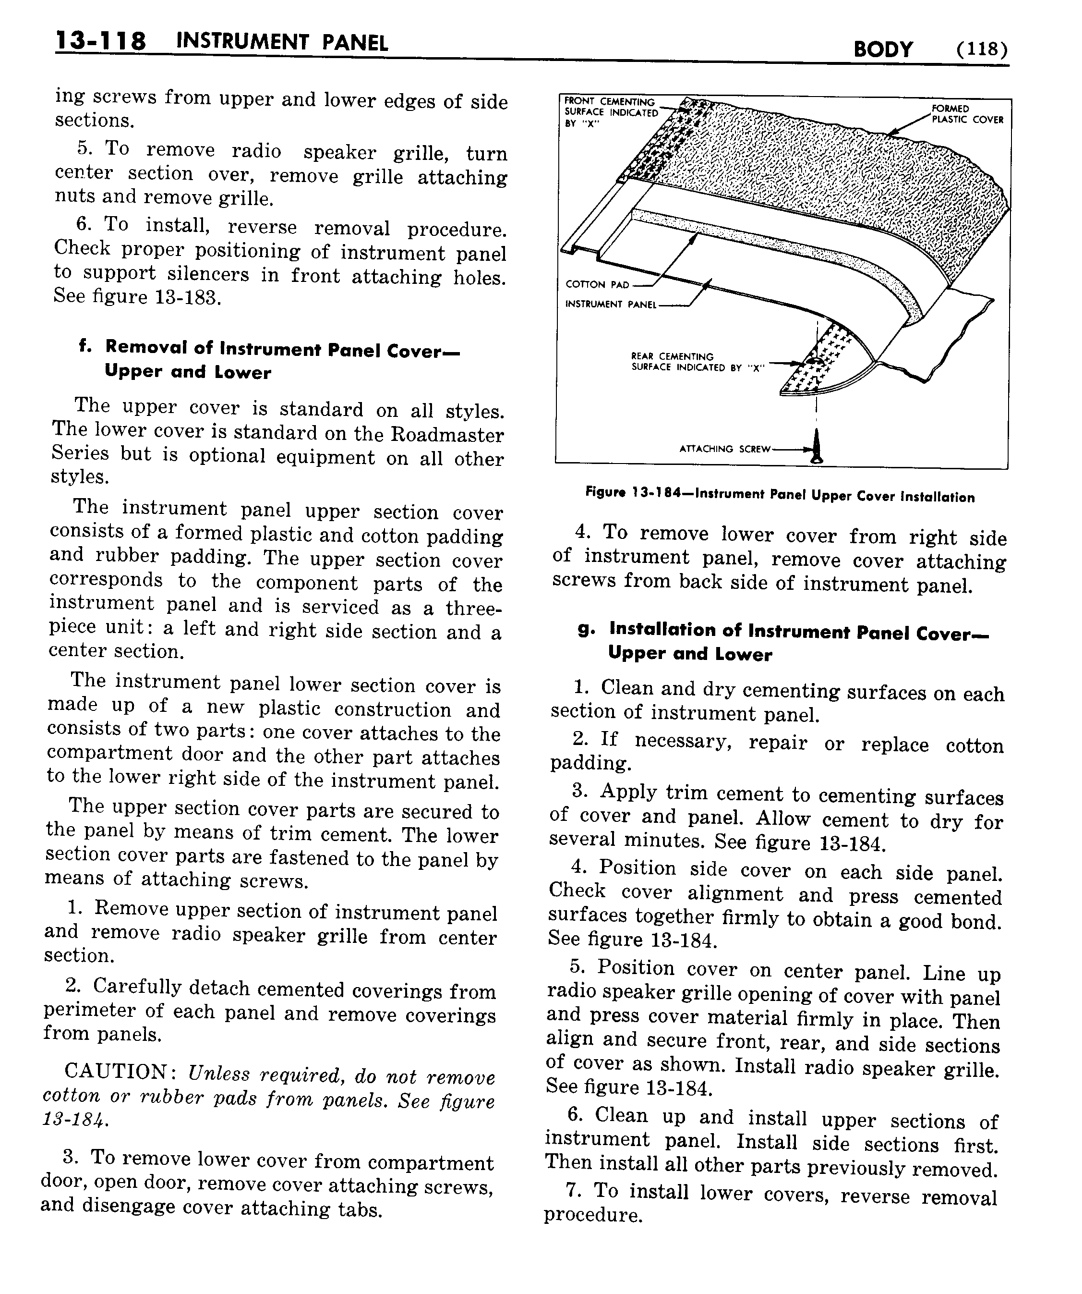 n_1957 Buick Body Service Manual-120-120.jpg